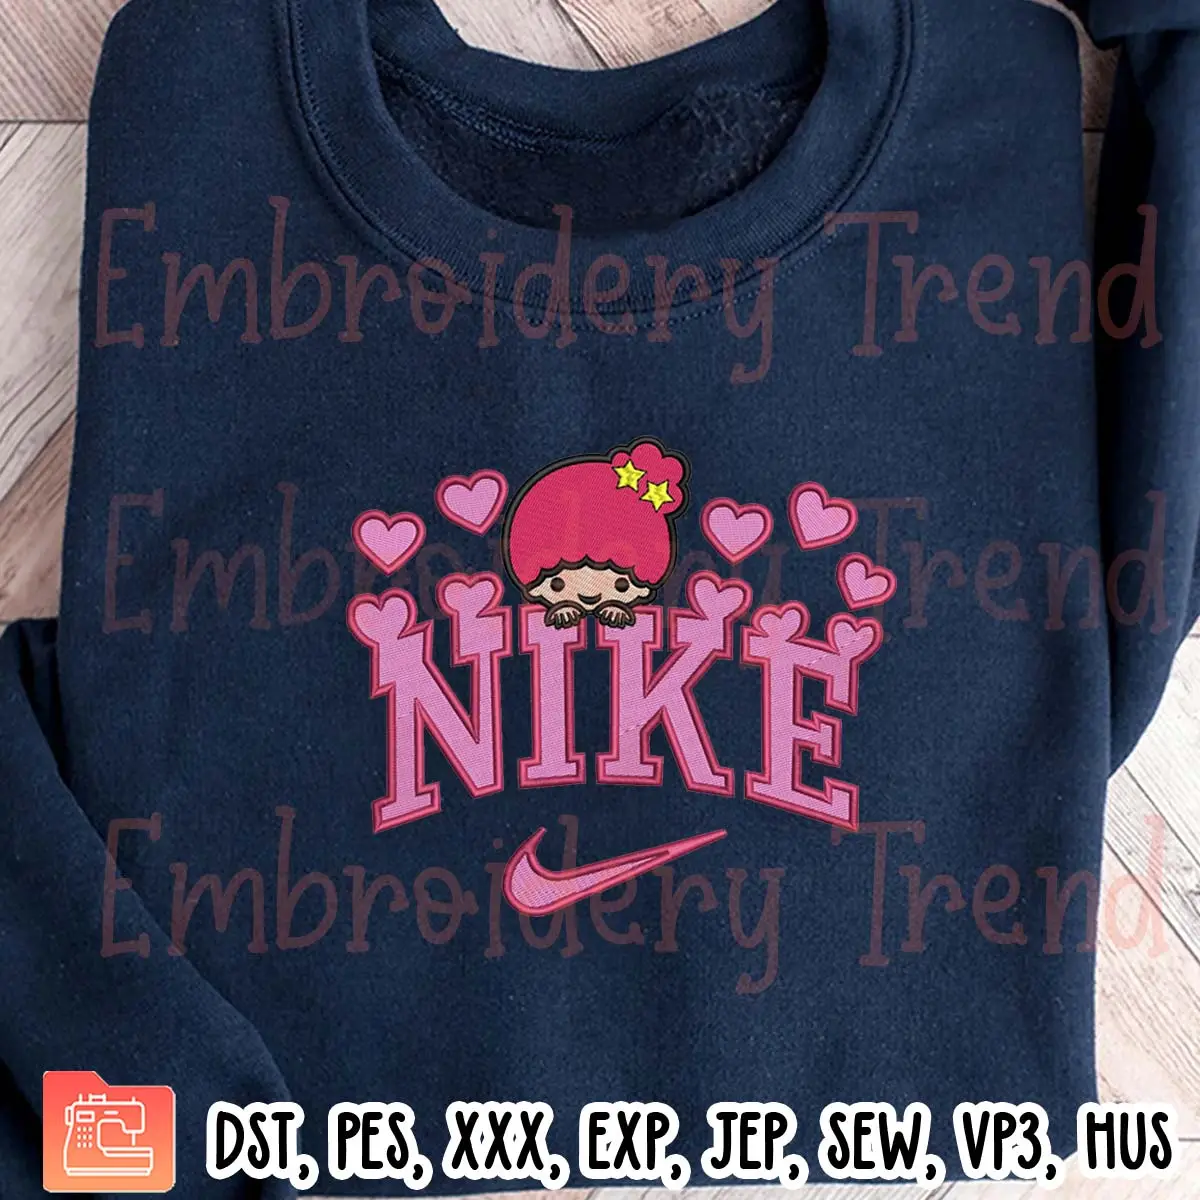 Nike Lala Sanrio Hearts Embroidery Design, Little Twin Stars Kiki and Lala Embroidery Digitizing Pes File